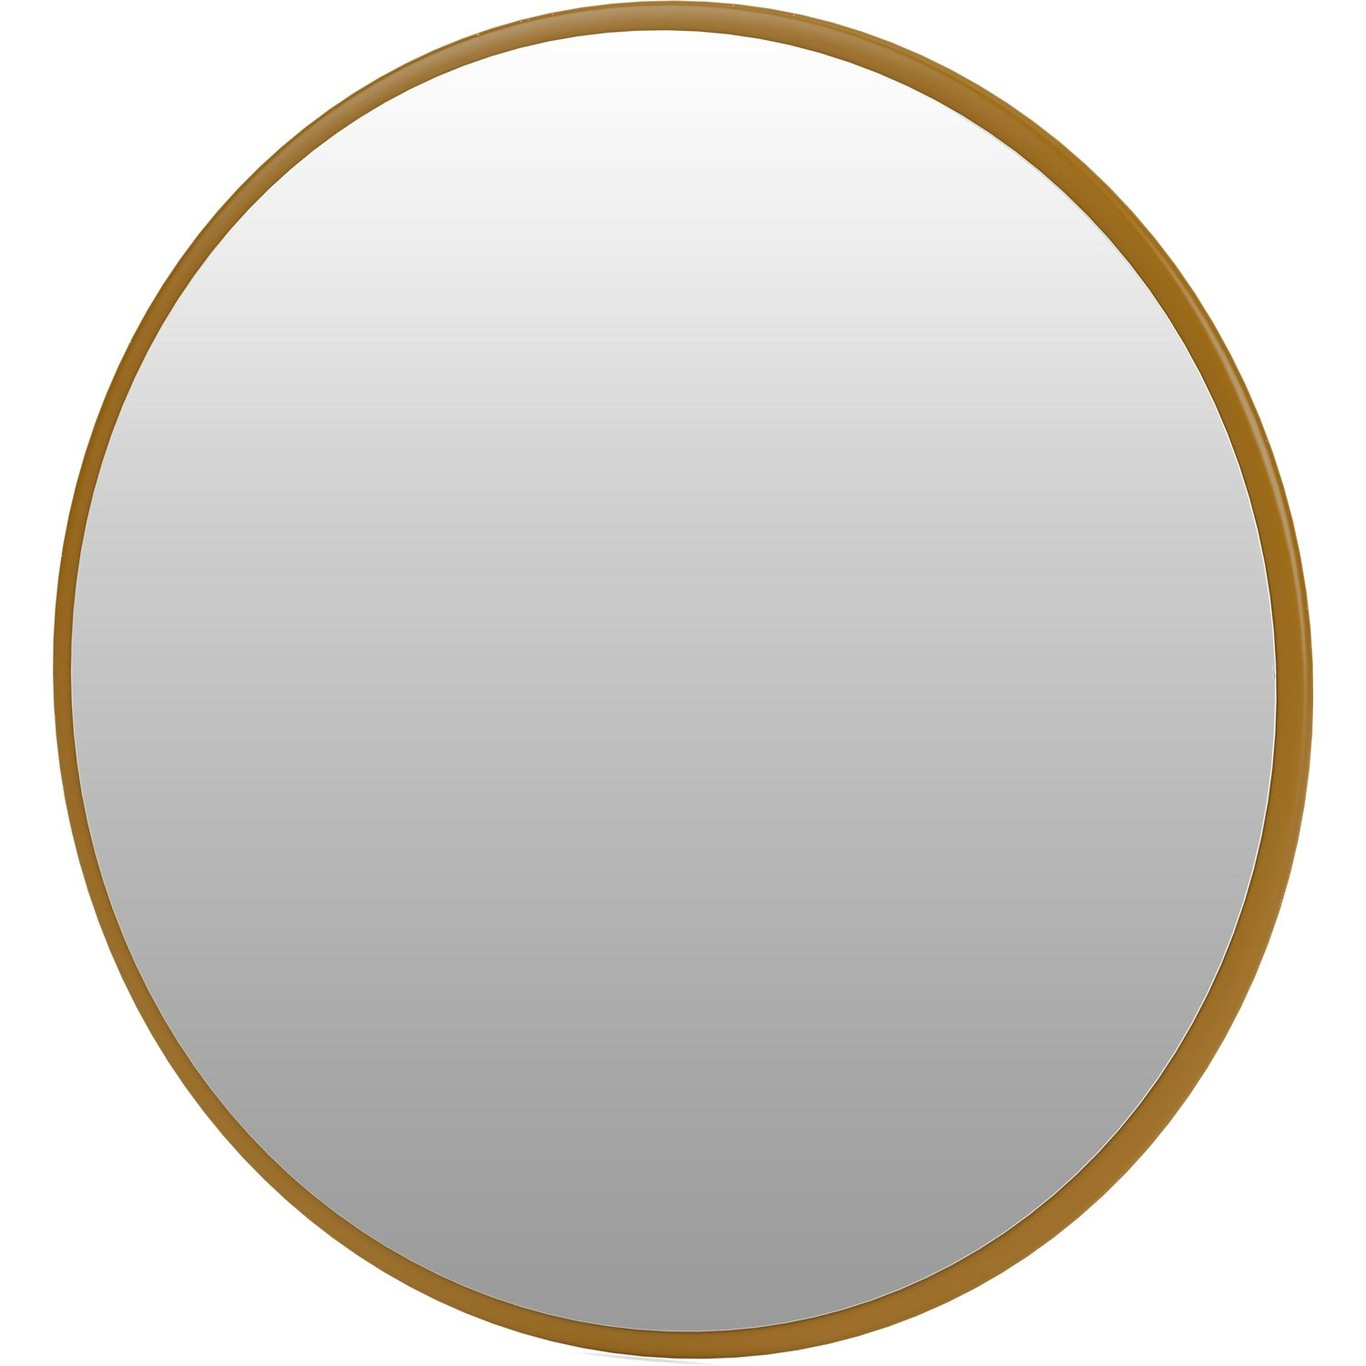 https://royaldesign.de/image/7/montana-montana-mini-mci-mirror-camomile-3?w=800&quality=80